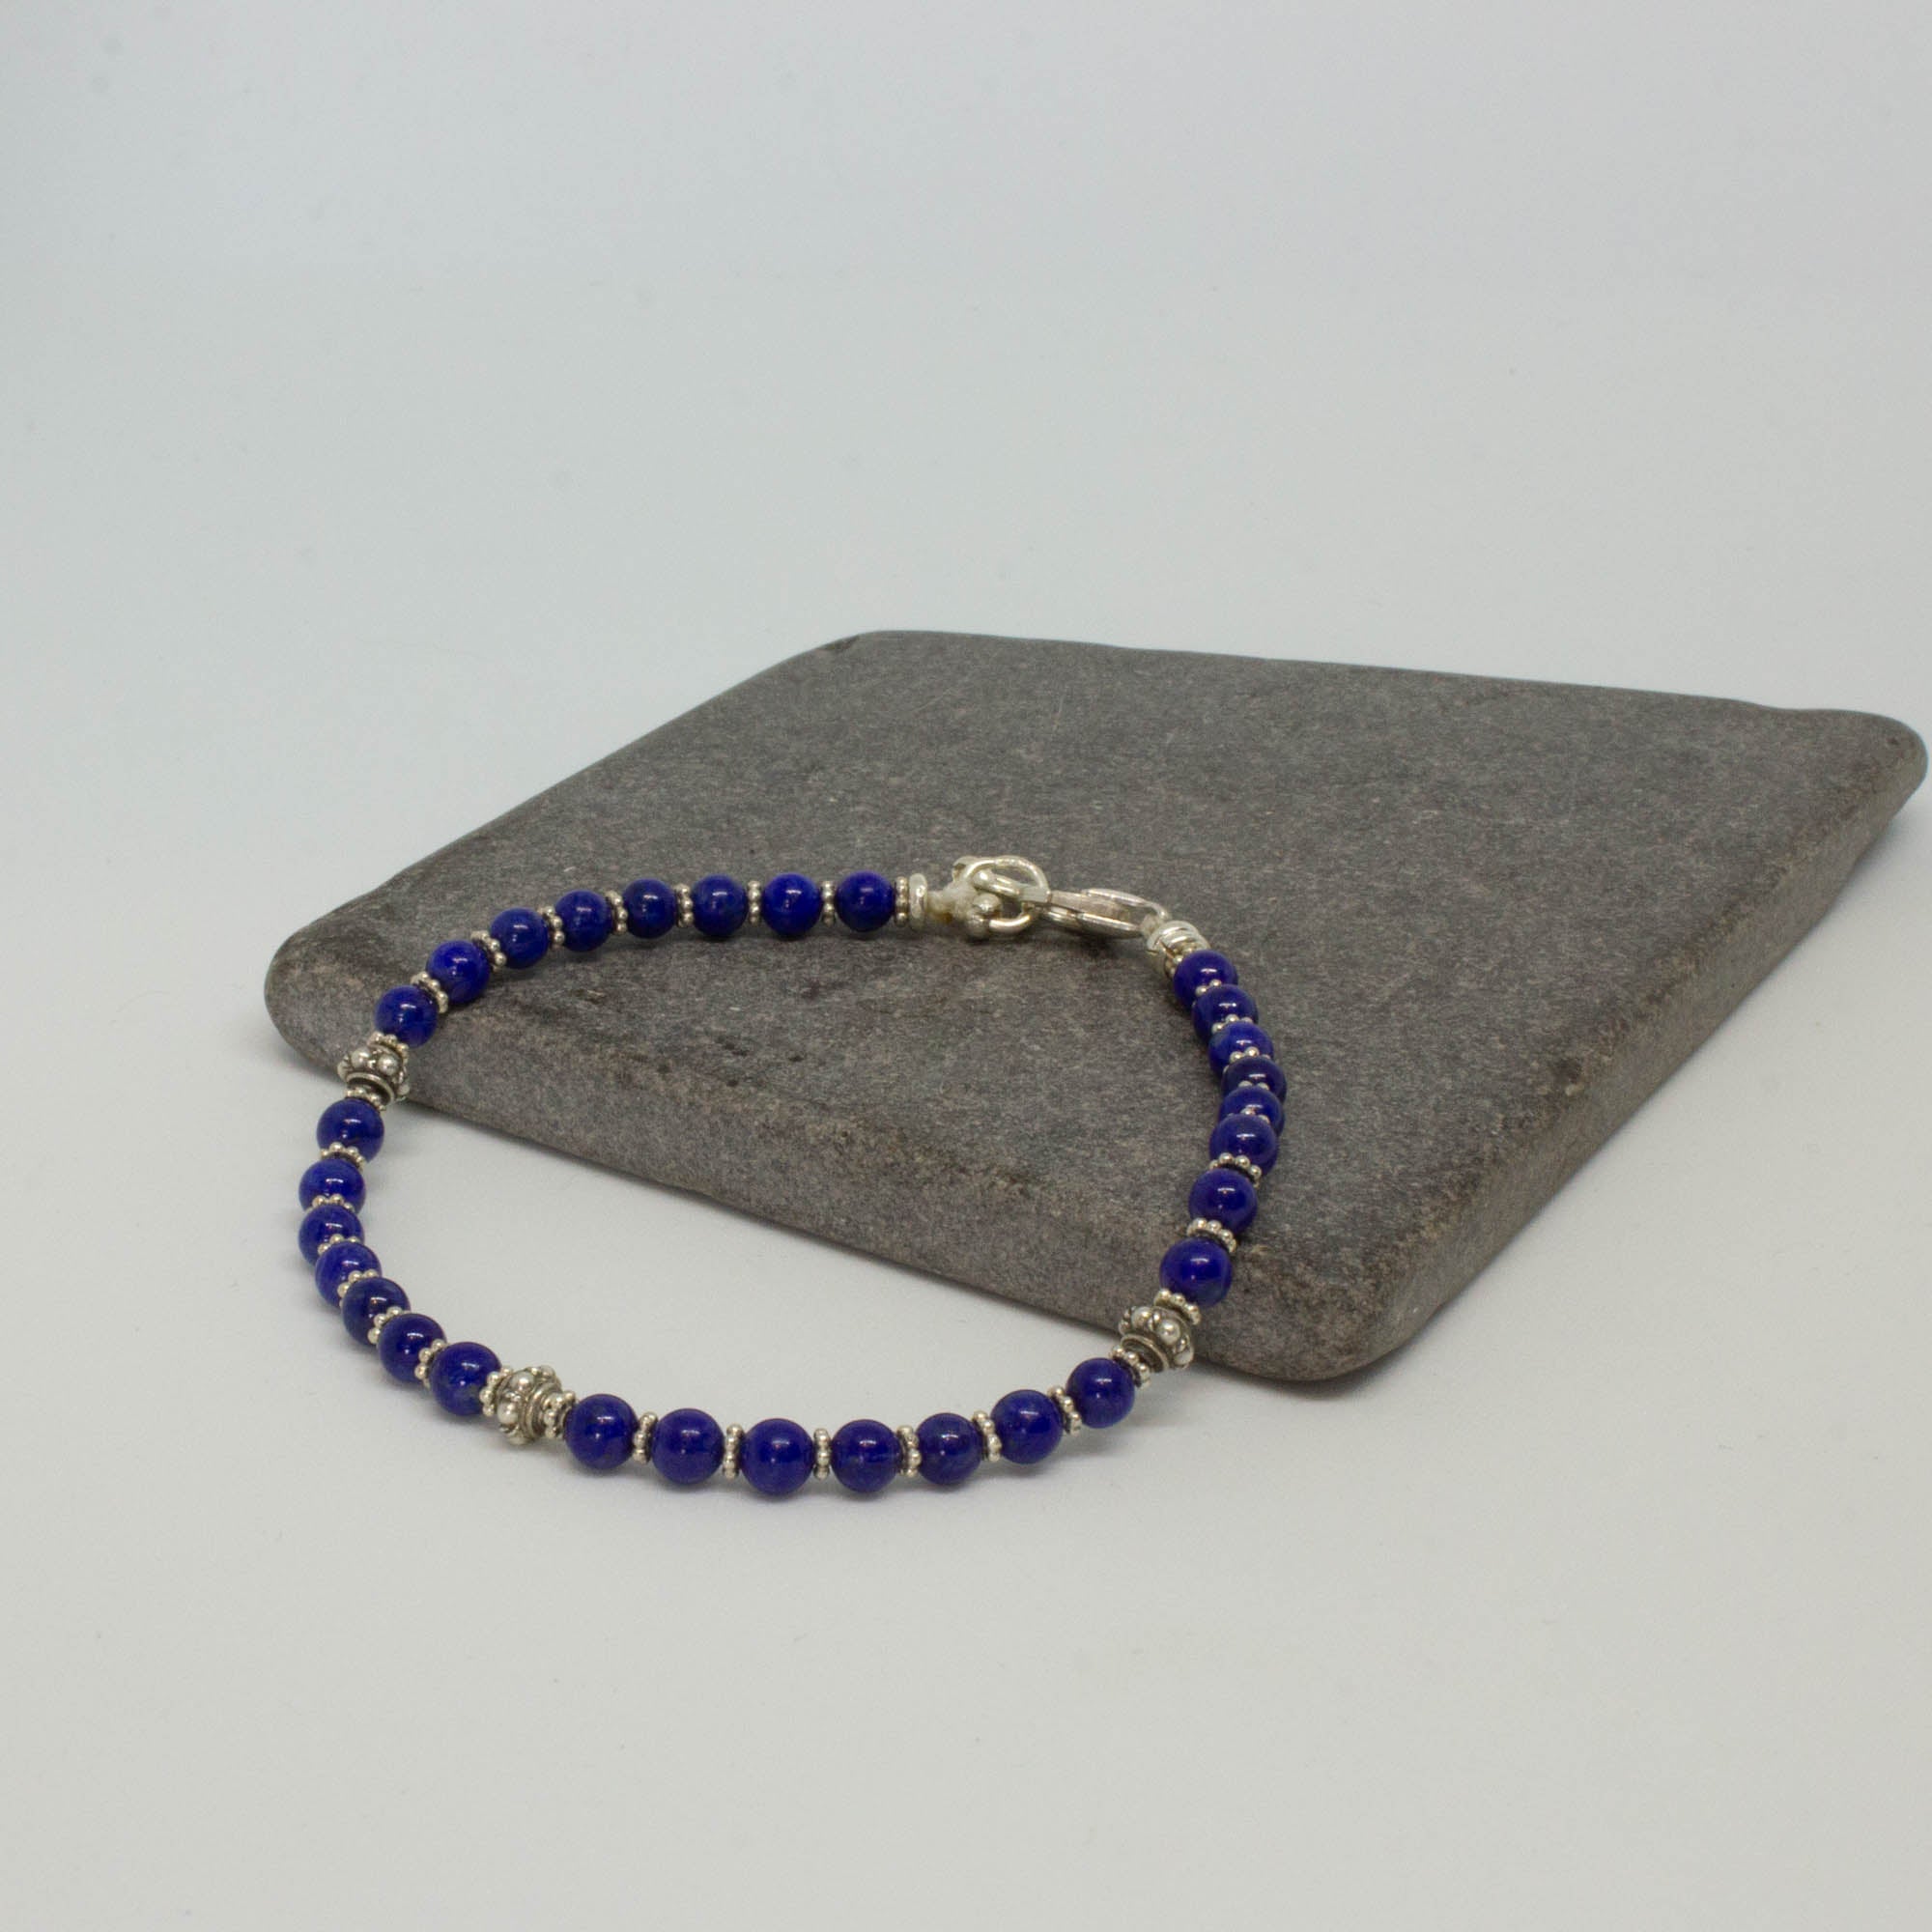 Lapis Lazuli and Silver Bracelet - Beyond Biasa